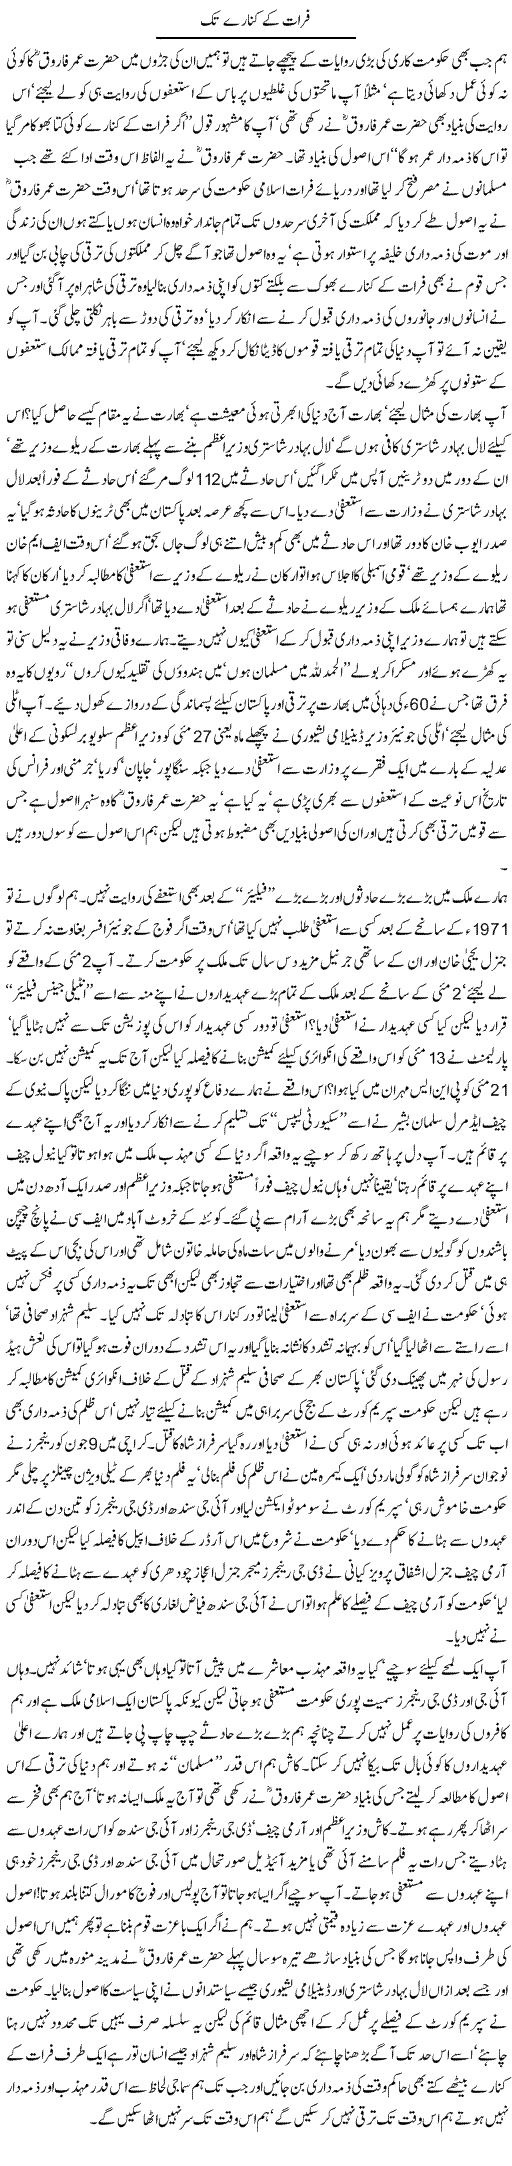 Hazrat Umar Farooq Express Column Javed Chaudhry 16 June 2011